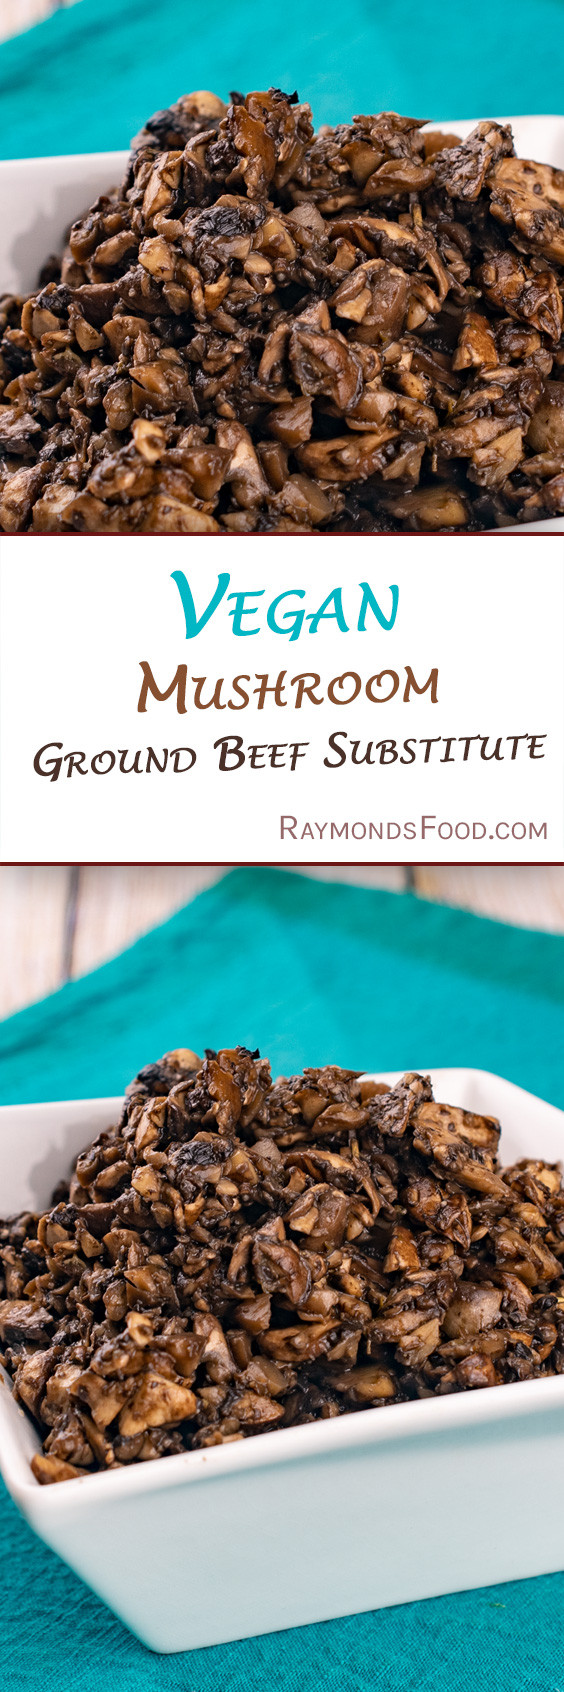 Vegetarian Ground Beef Substitute
 Raymond s Food